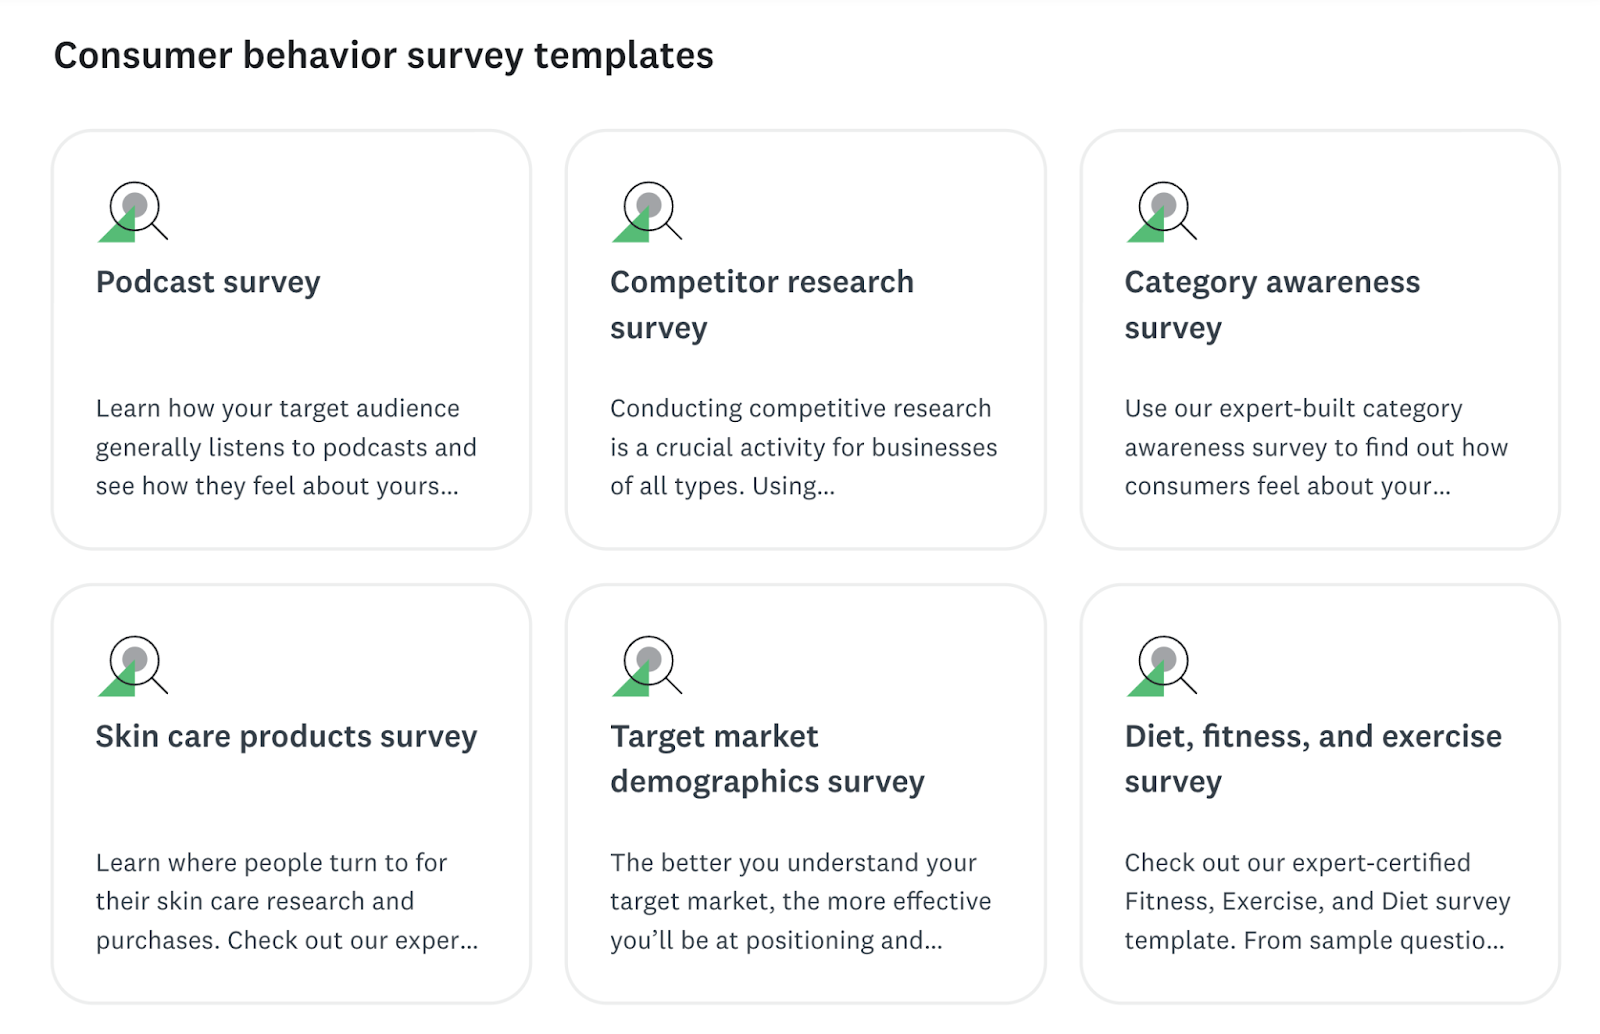 Consumer behavior survey templates in SurveyMonkey